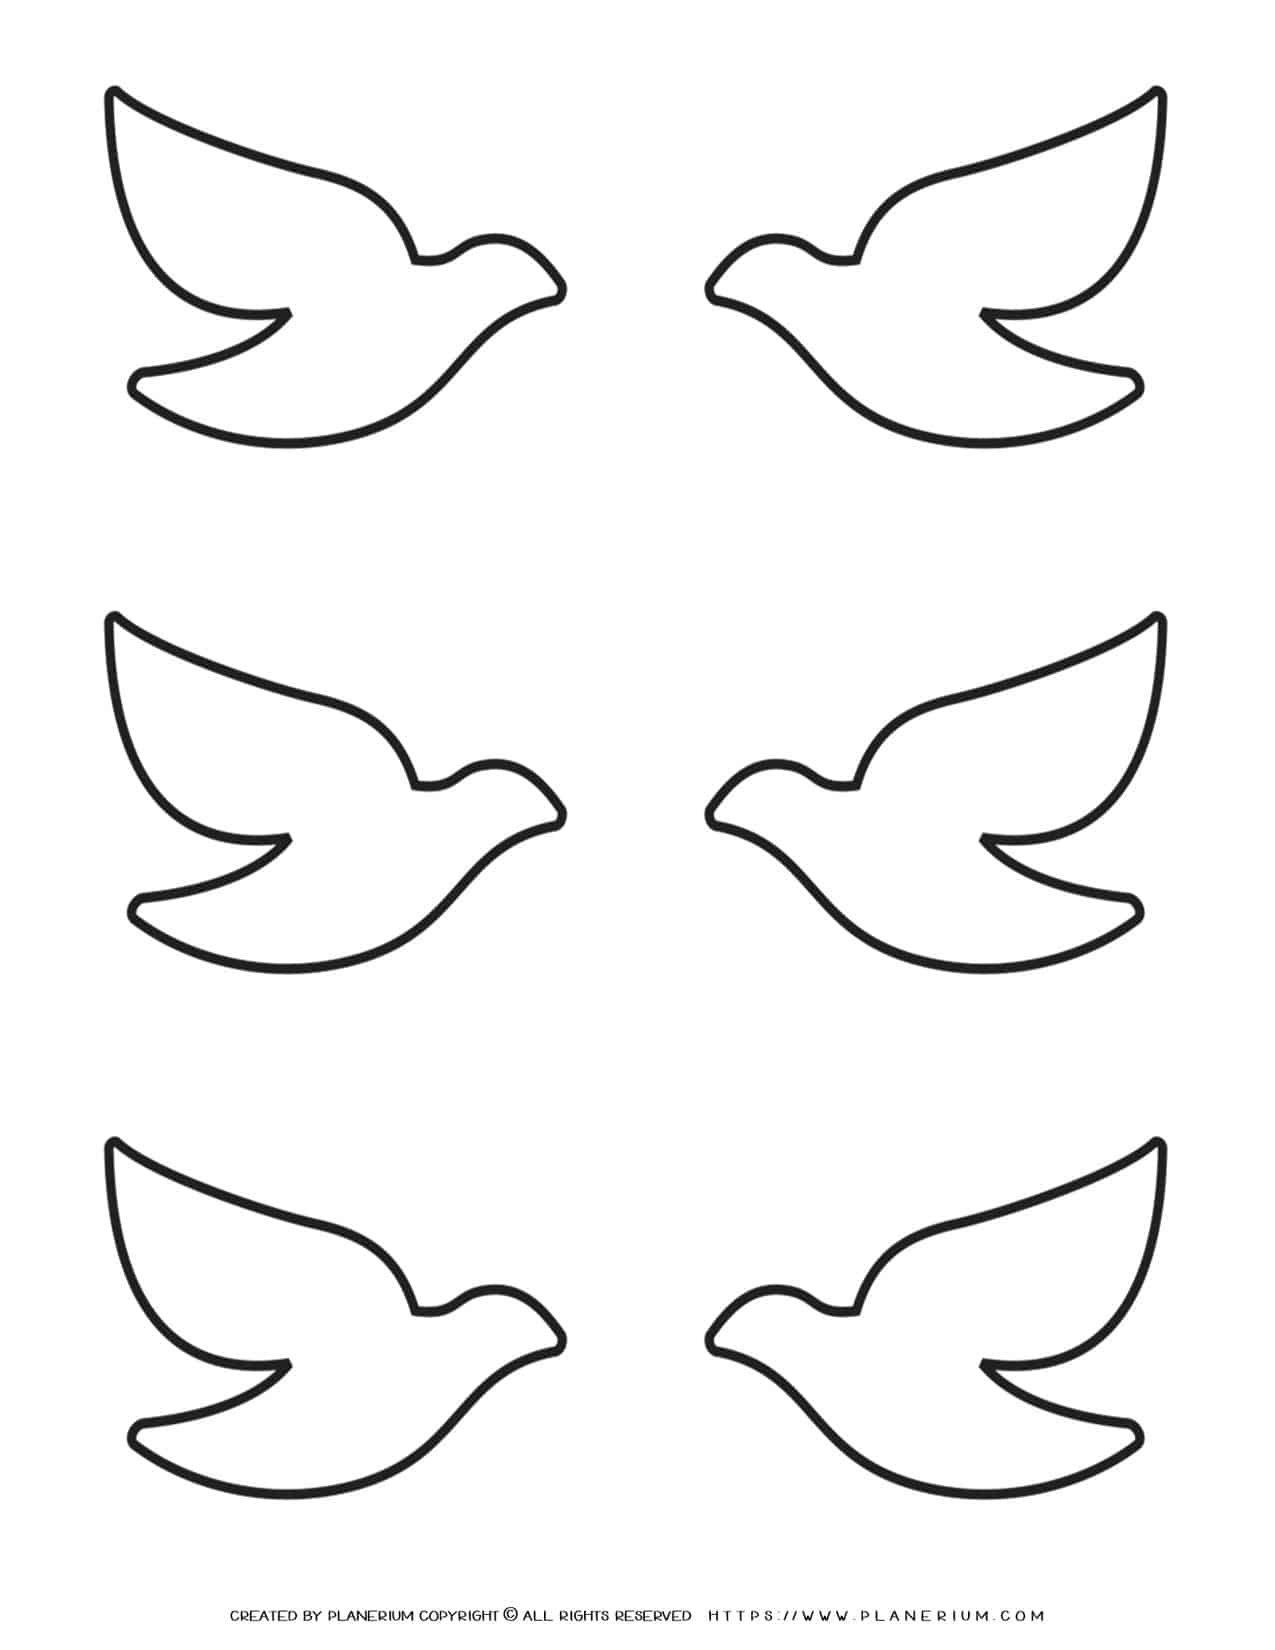 Six Birds Template | Planerium